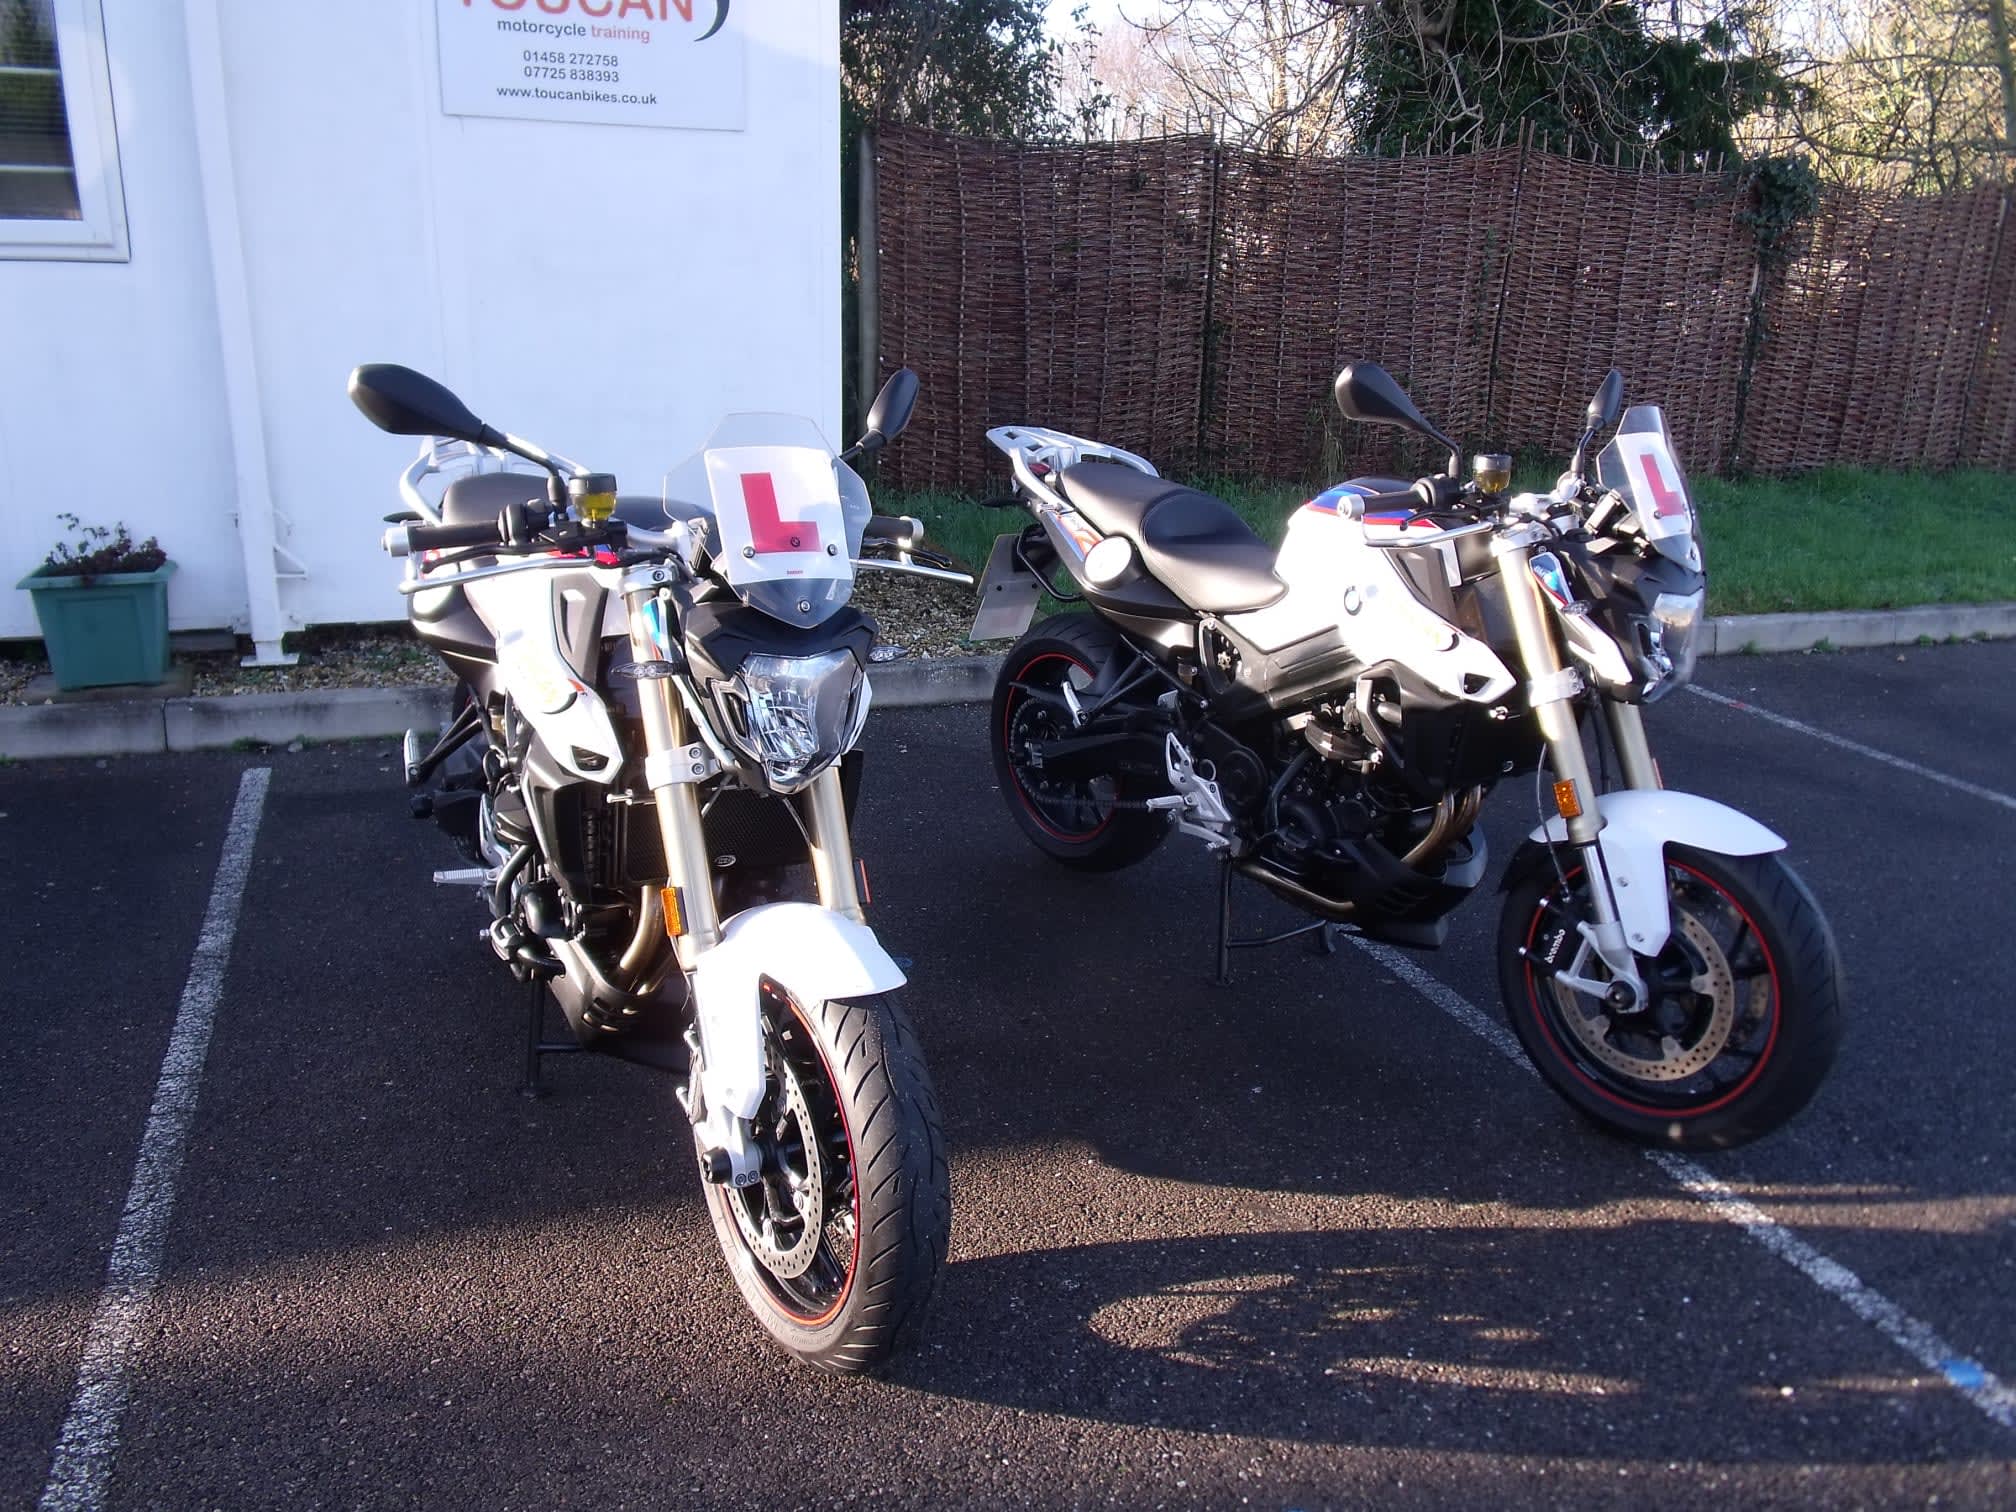 Toucan Motorcycle Training Glastonbury 07725 838393